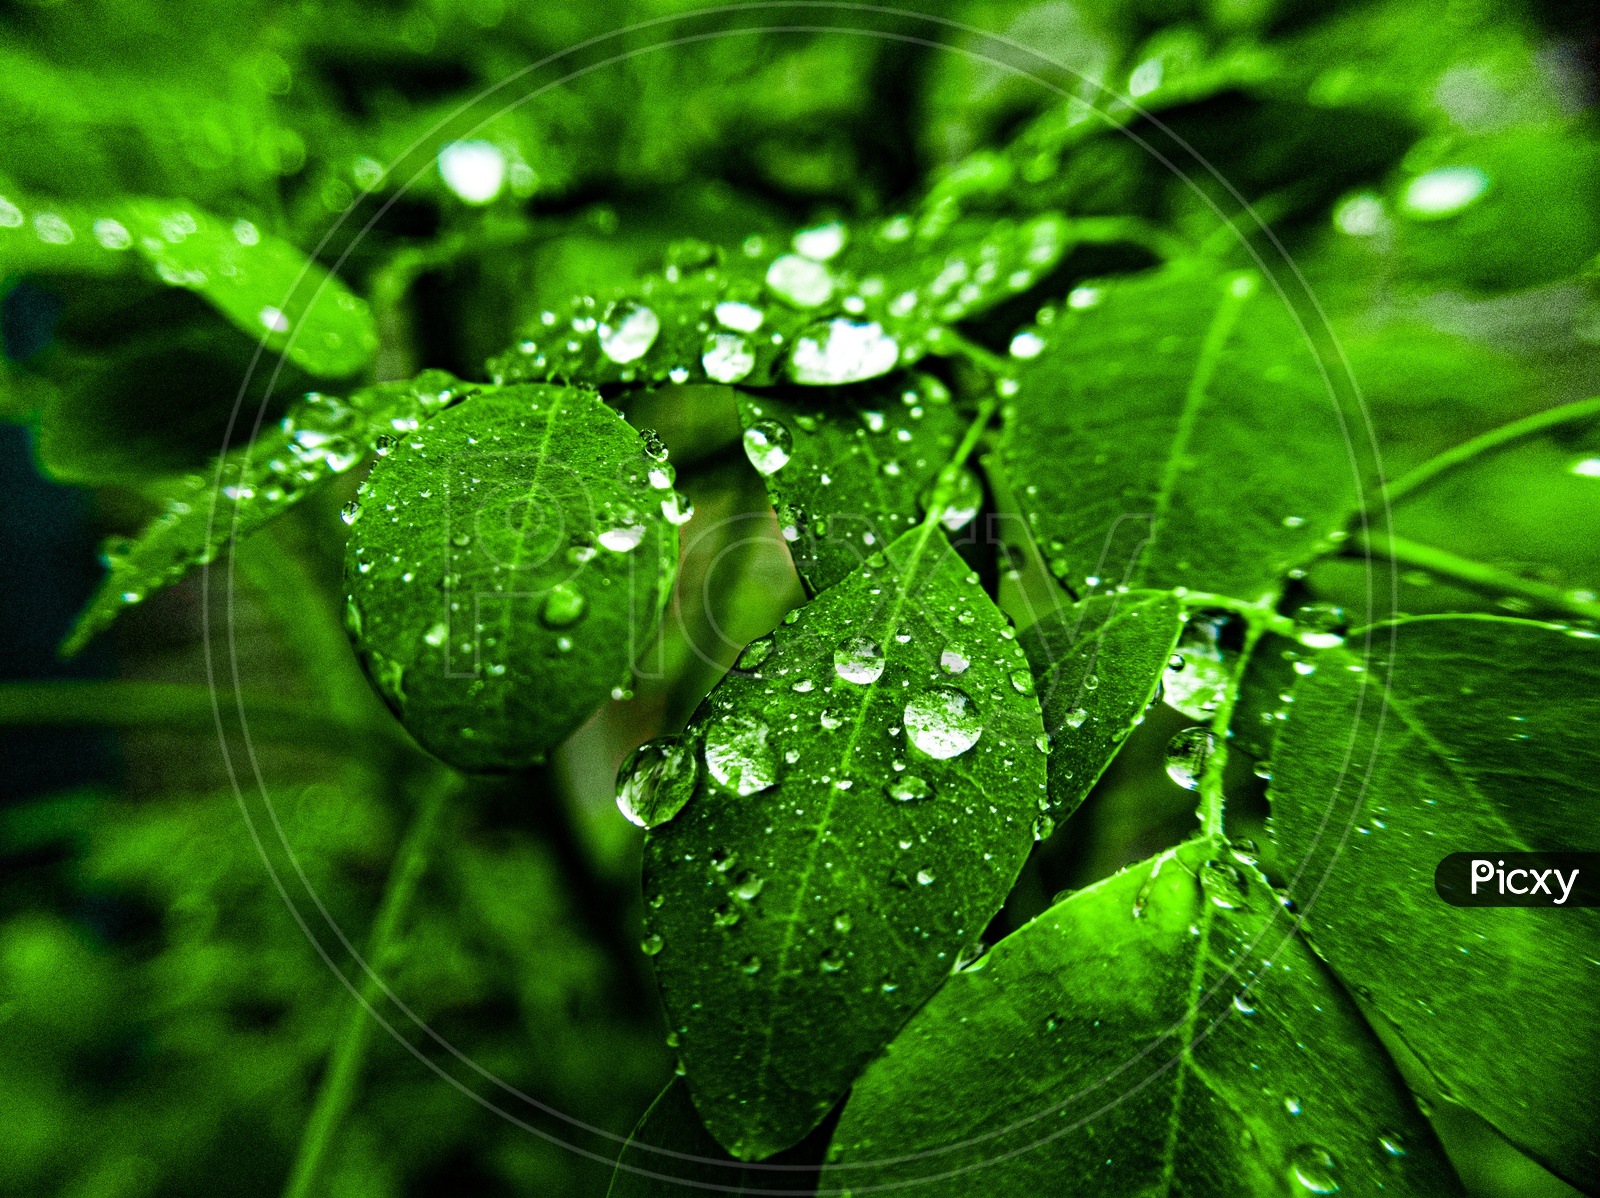 Rain drops on leaves